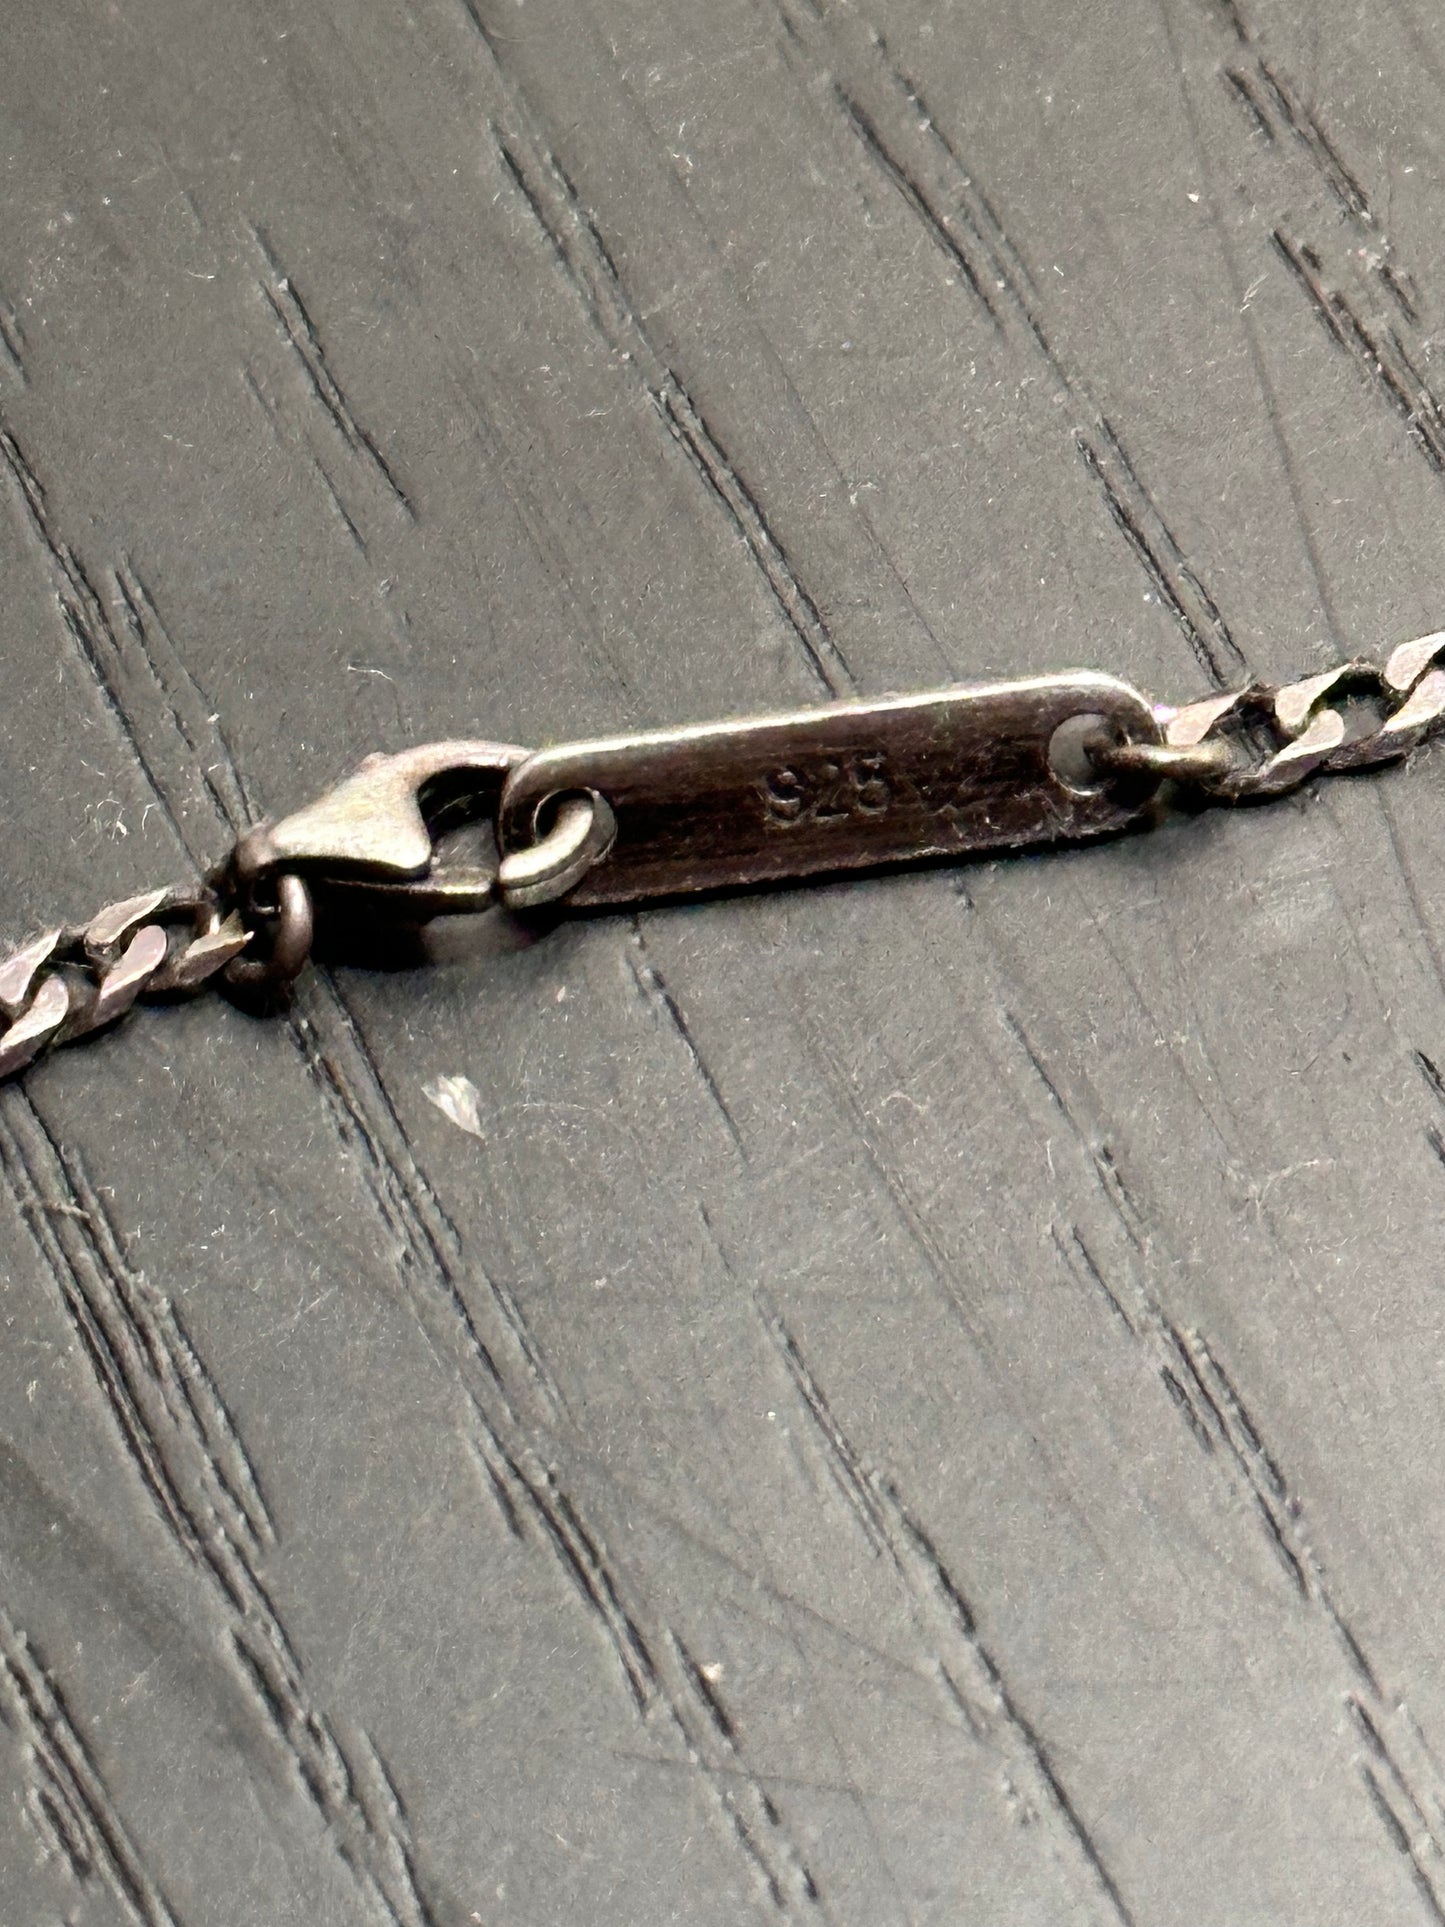 WRATH OF MAN: “H” Miansai 925 3mm Cuban Chain Necklace